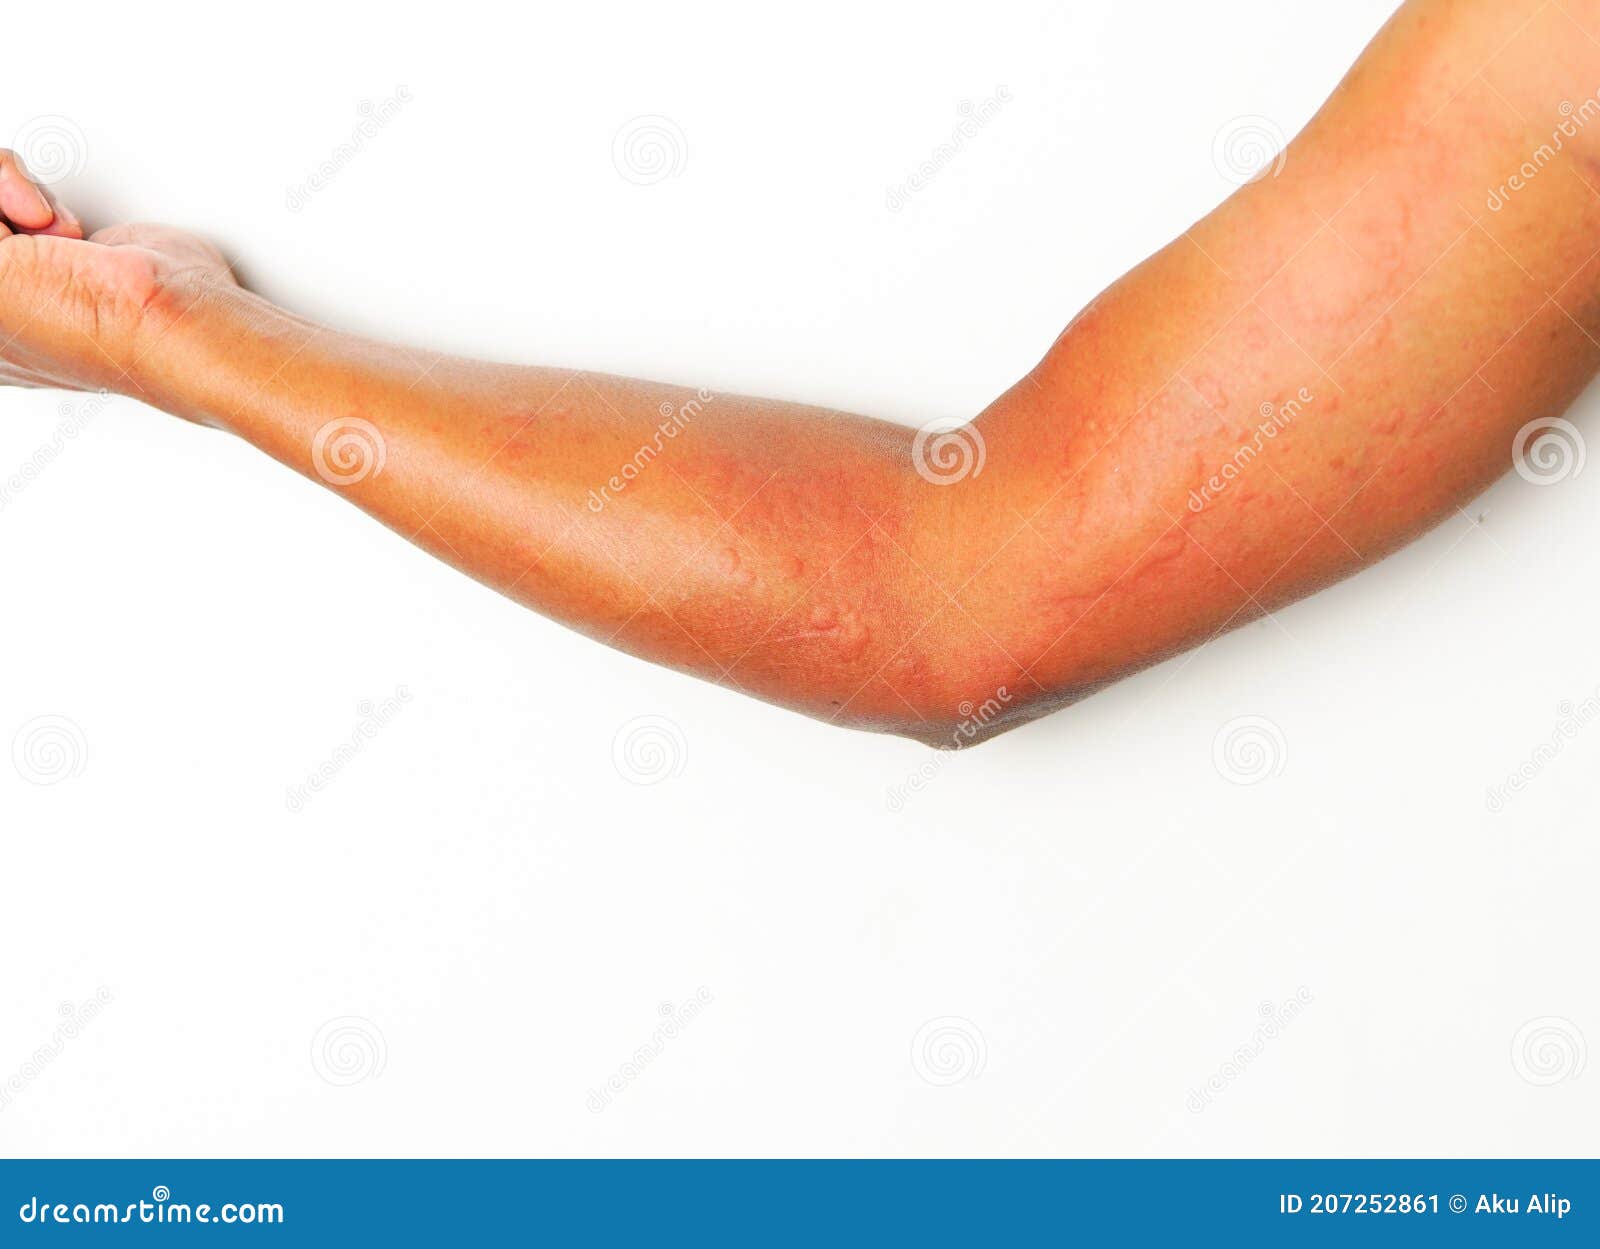 Close Up Allergy Rash On Sensitive Skin Stock Image Image Of Hand